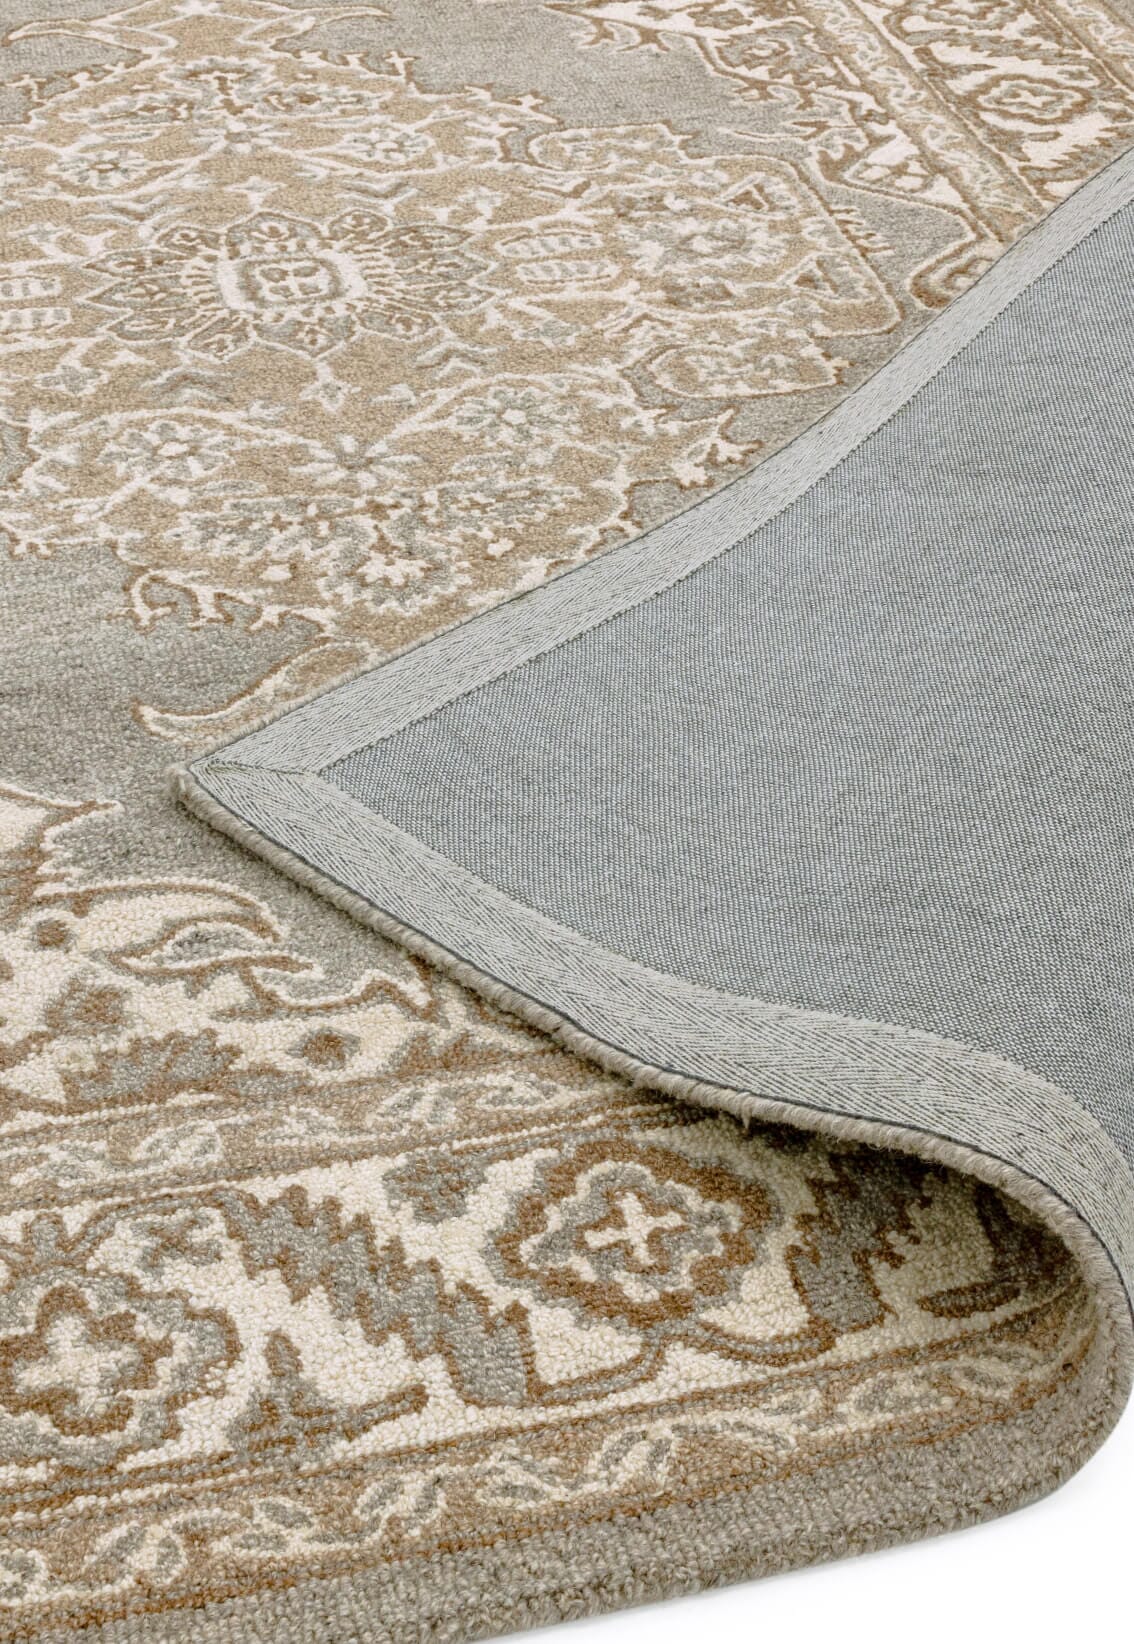  Asiatic Carpets-Asiatic Carpets Bronte Fine Loop Hand Tufted Rug Natural - 120 x 170cm-Beige, Natural 069 